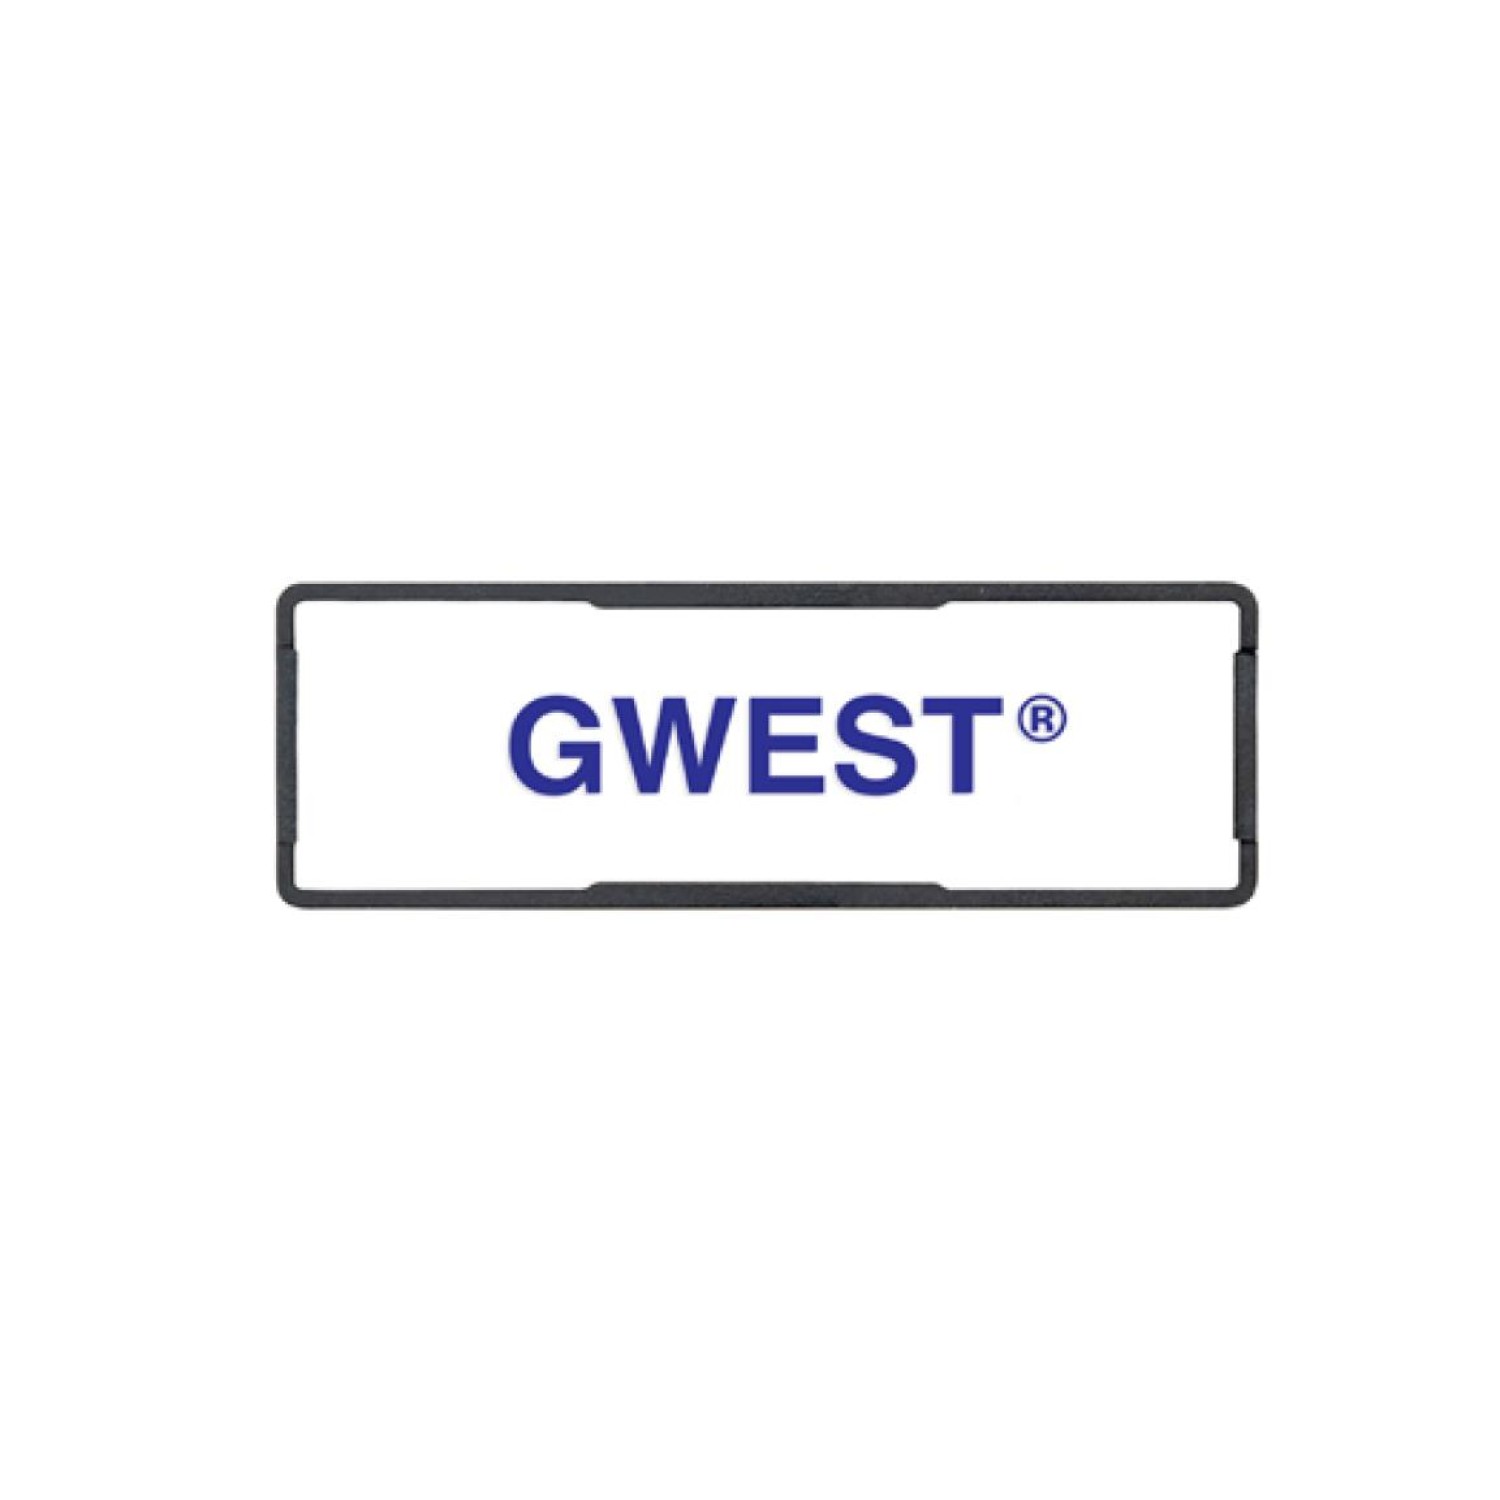 Gwest Pano Etiketi - GPET 1 - 50 Adet